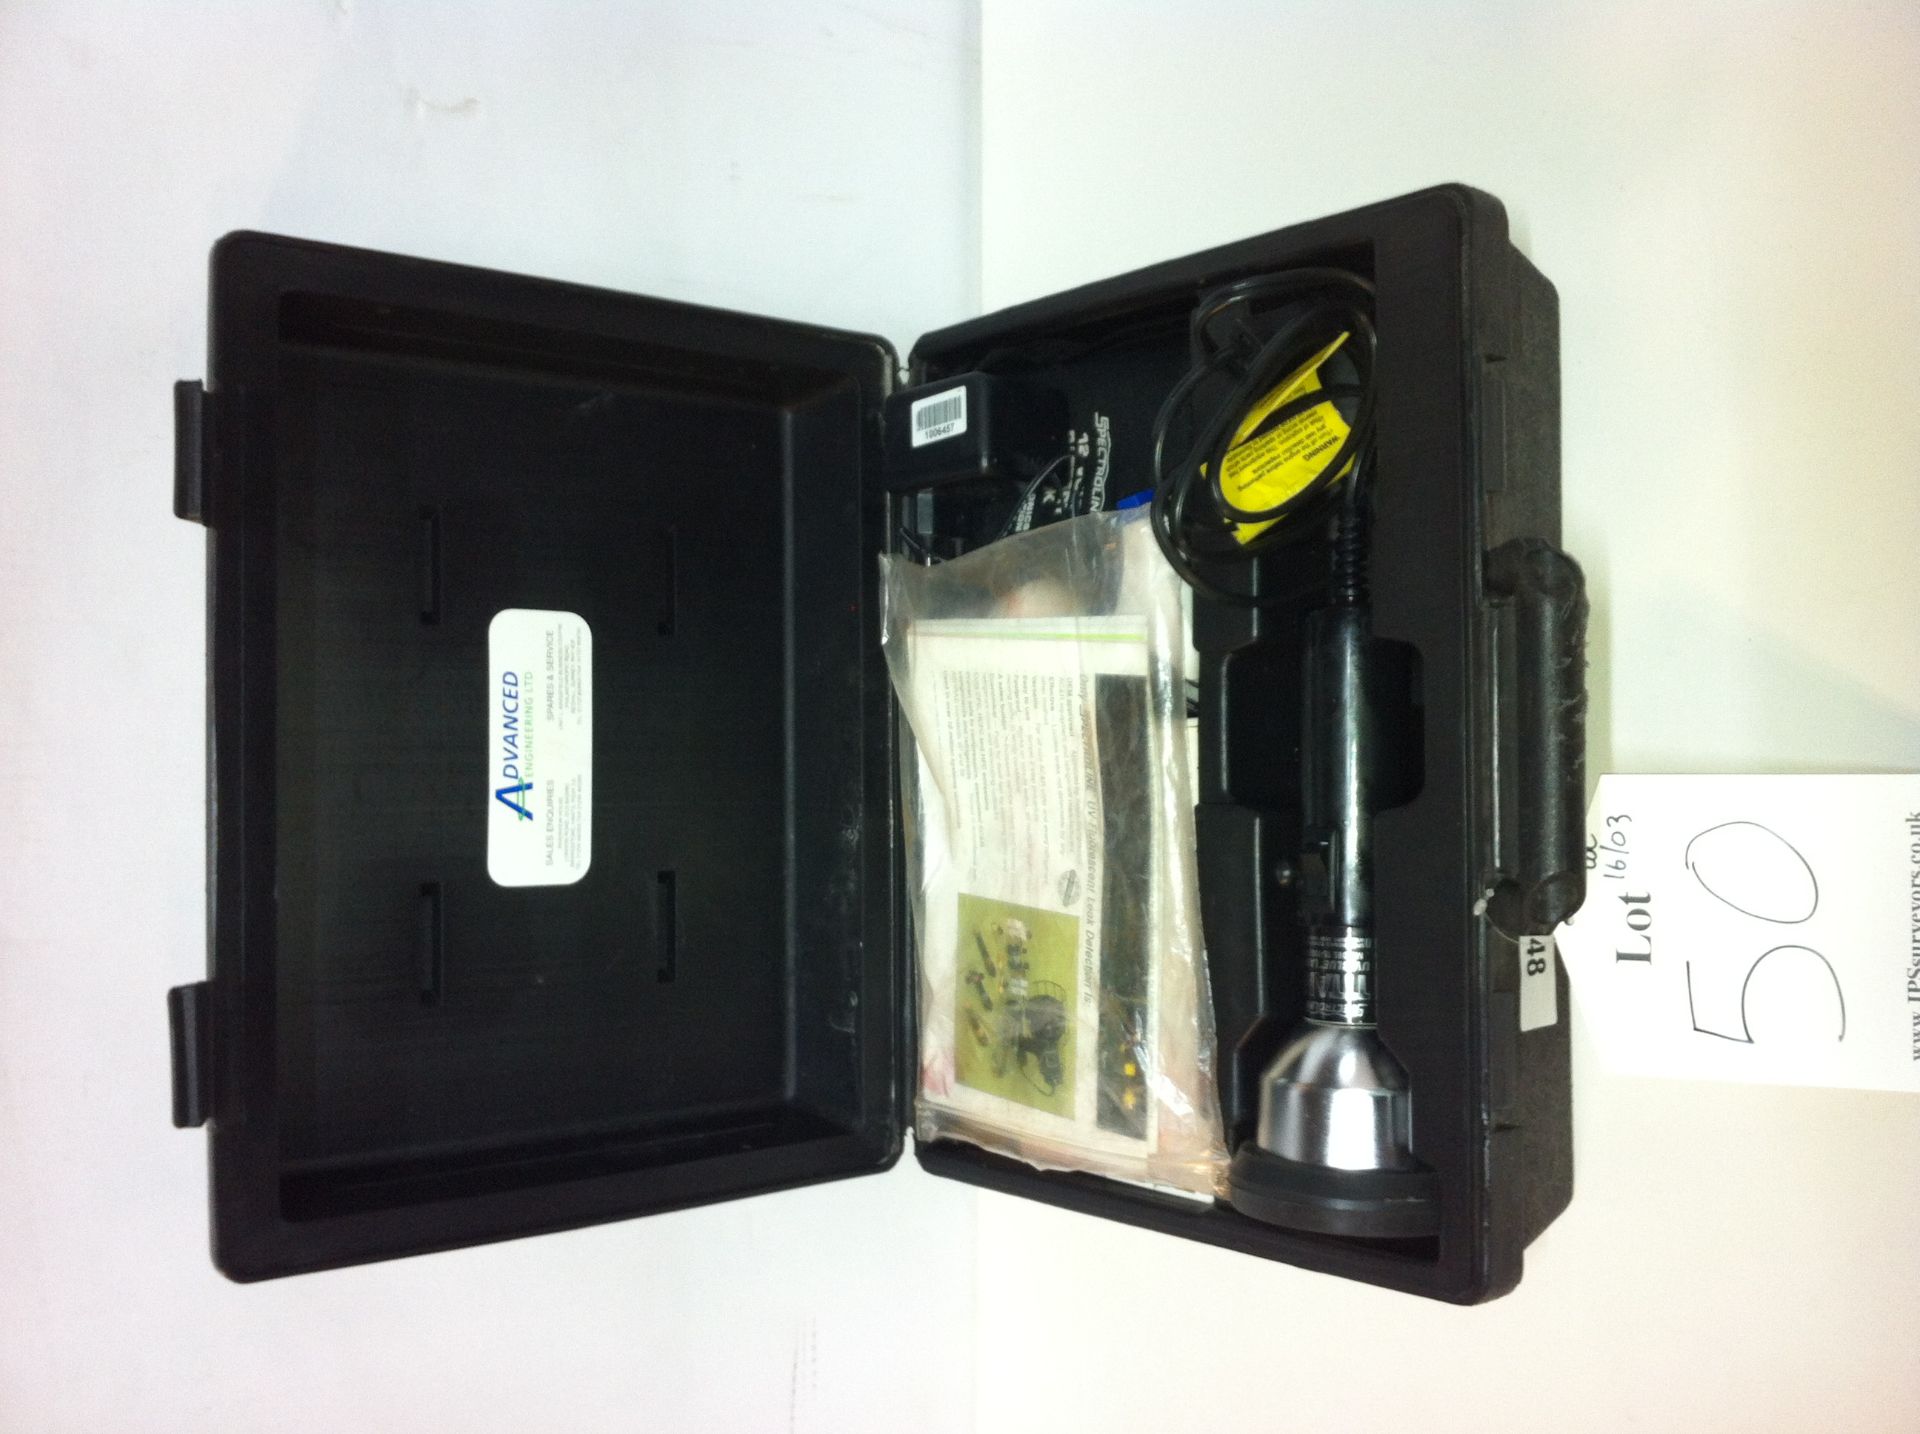 Spectroline VU Fluorescent leak detection equipment